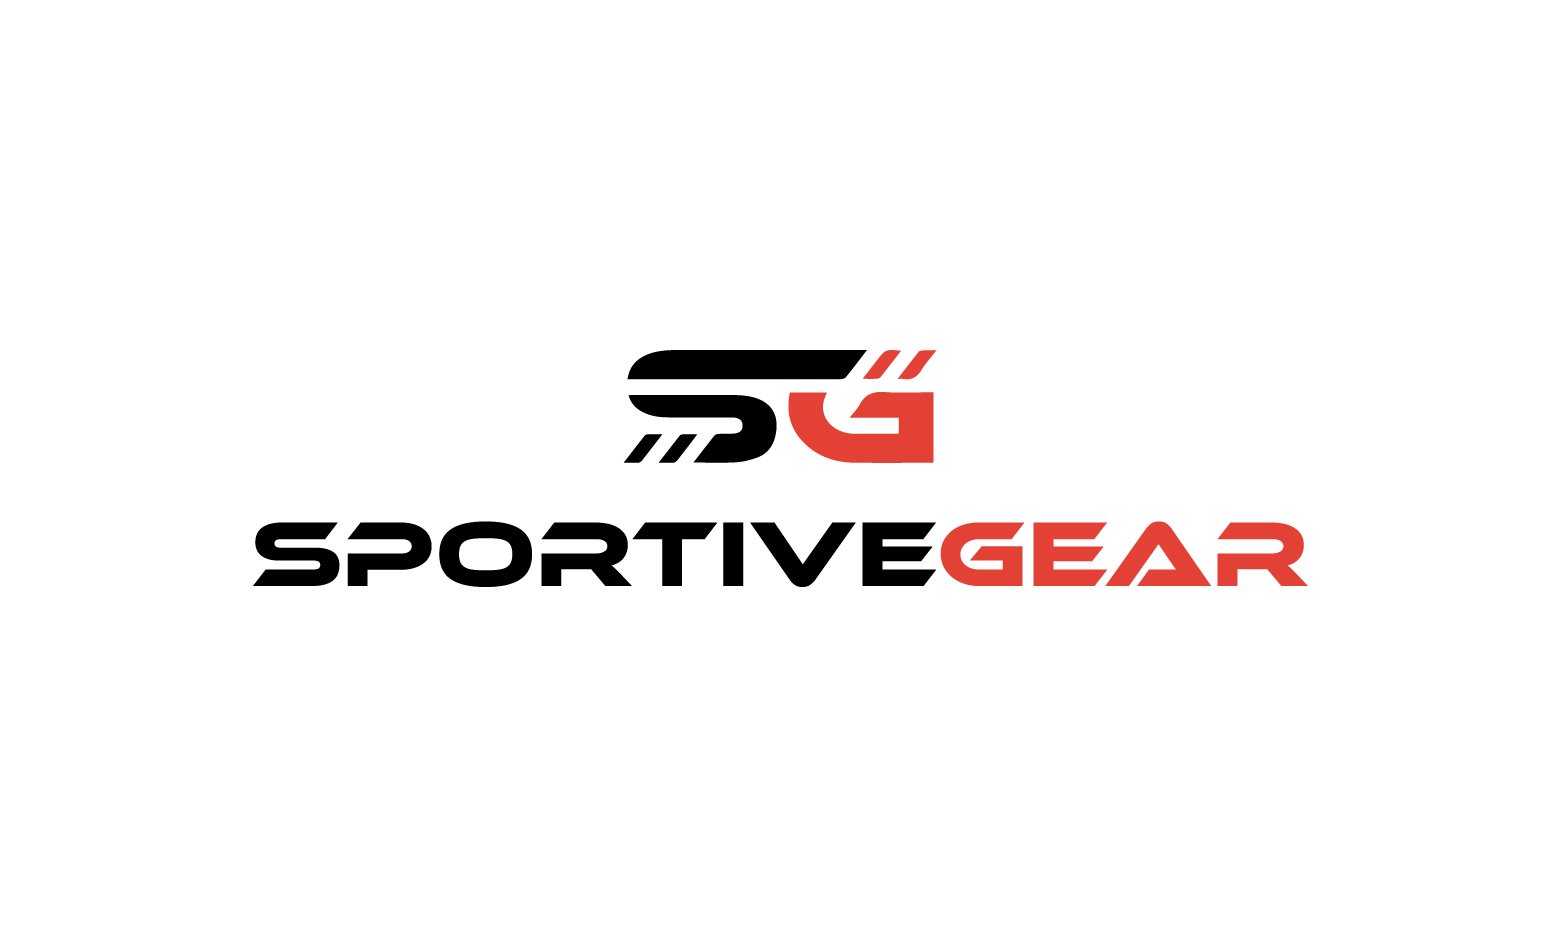 SportiveGear.com - Creative brandable domain for sale